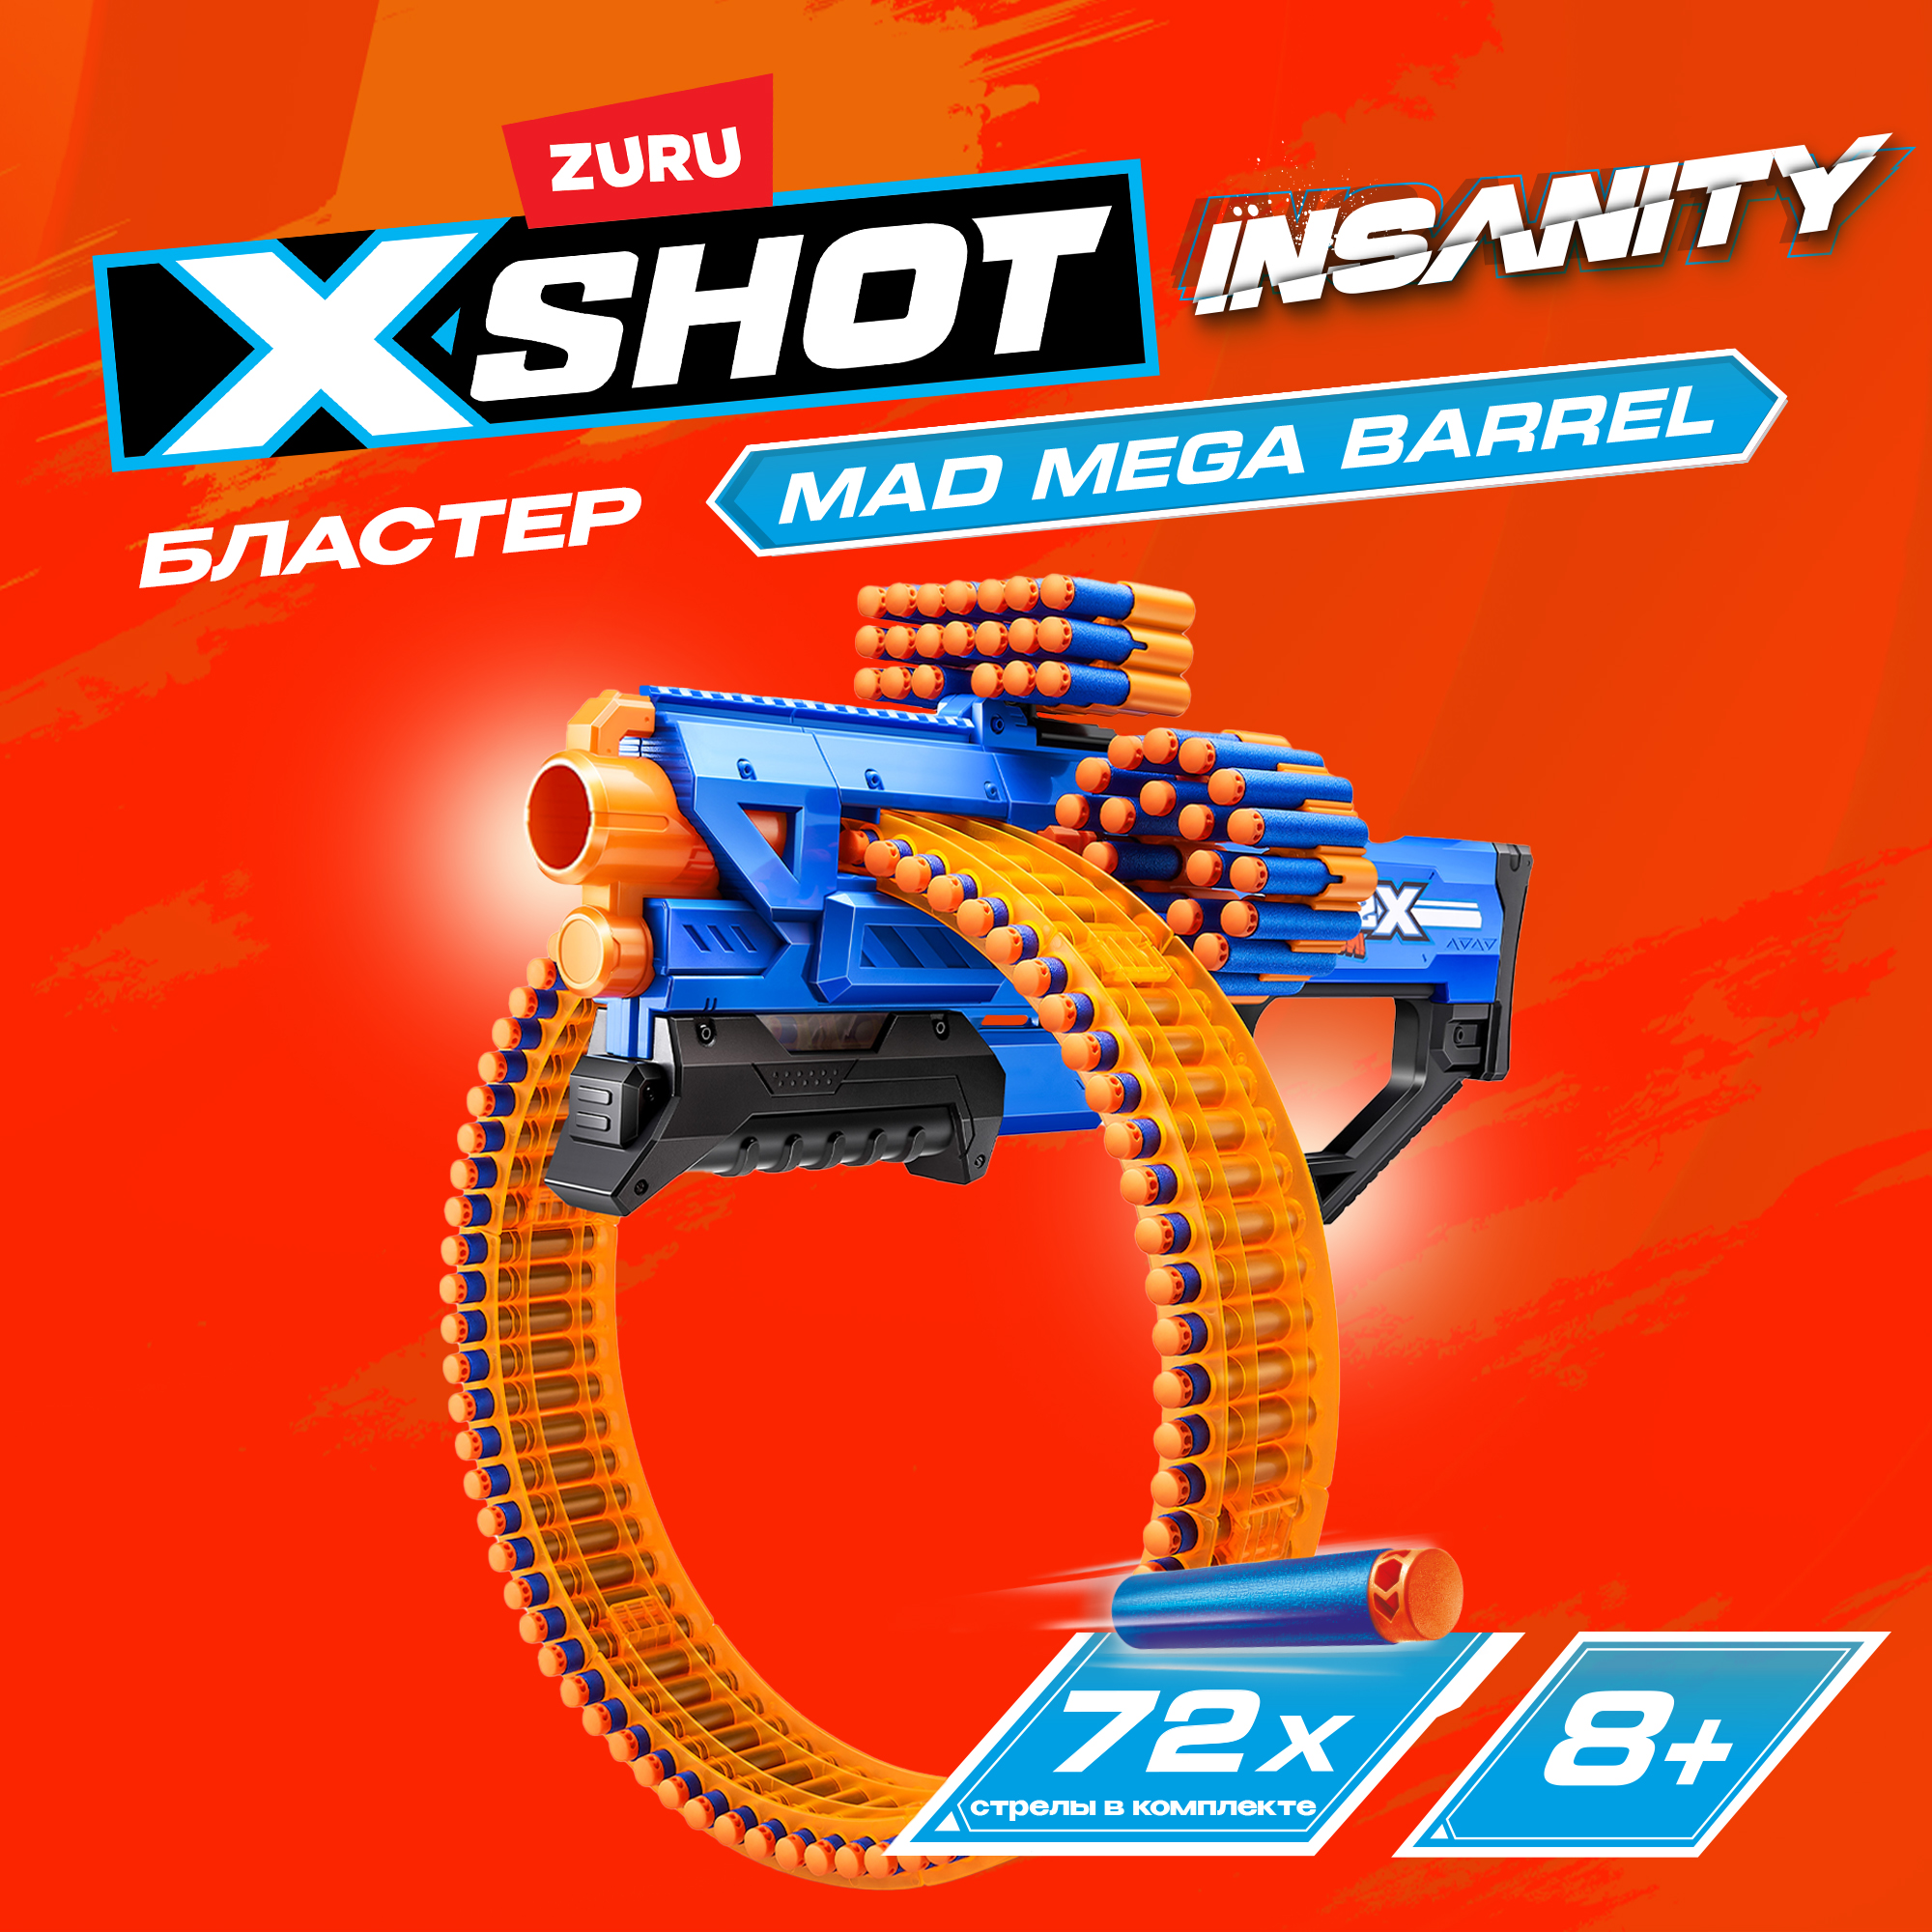 Набор игровой X-Shot Insanity Mad Mega Barrel 36609 - фото 1